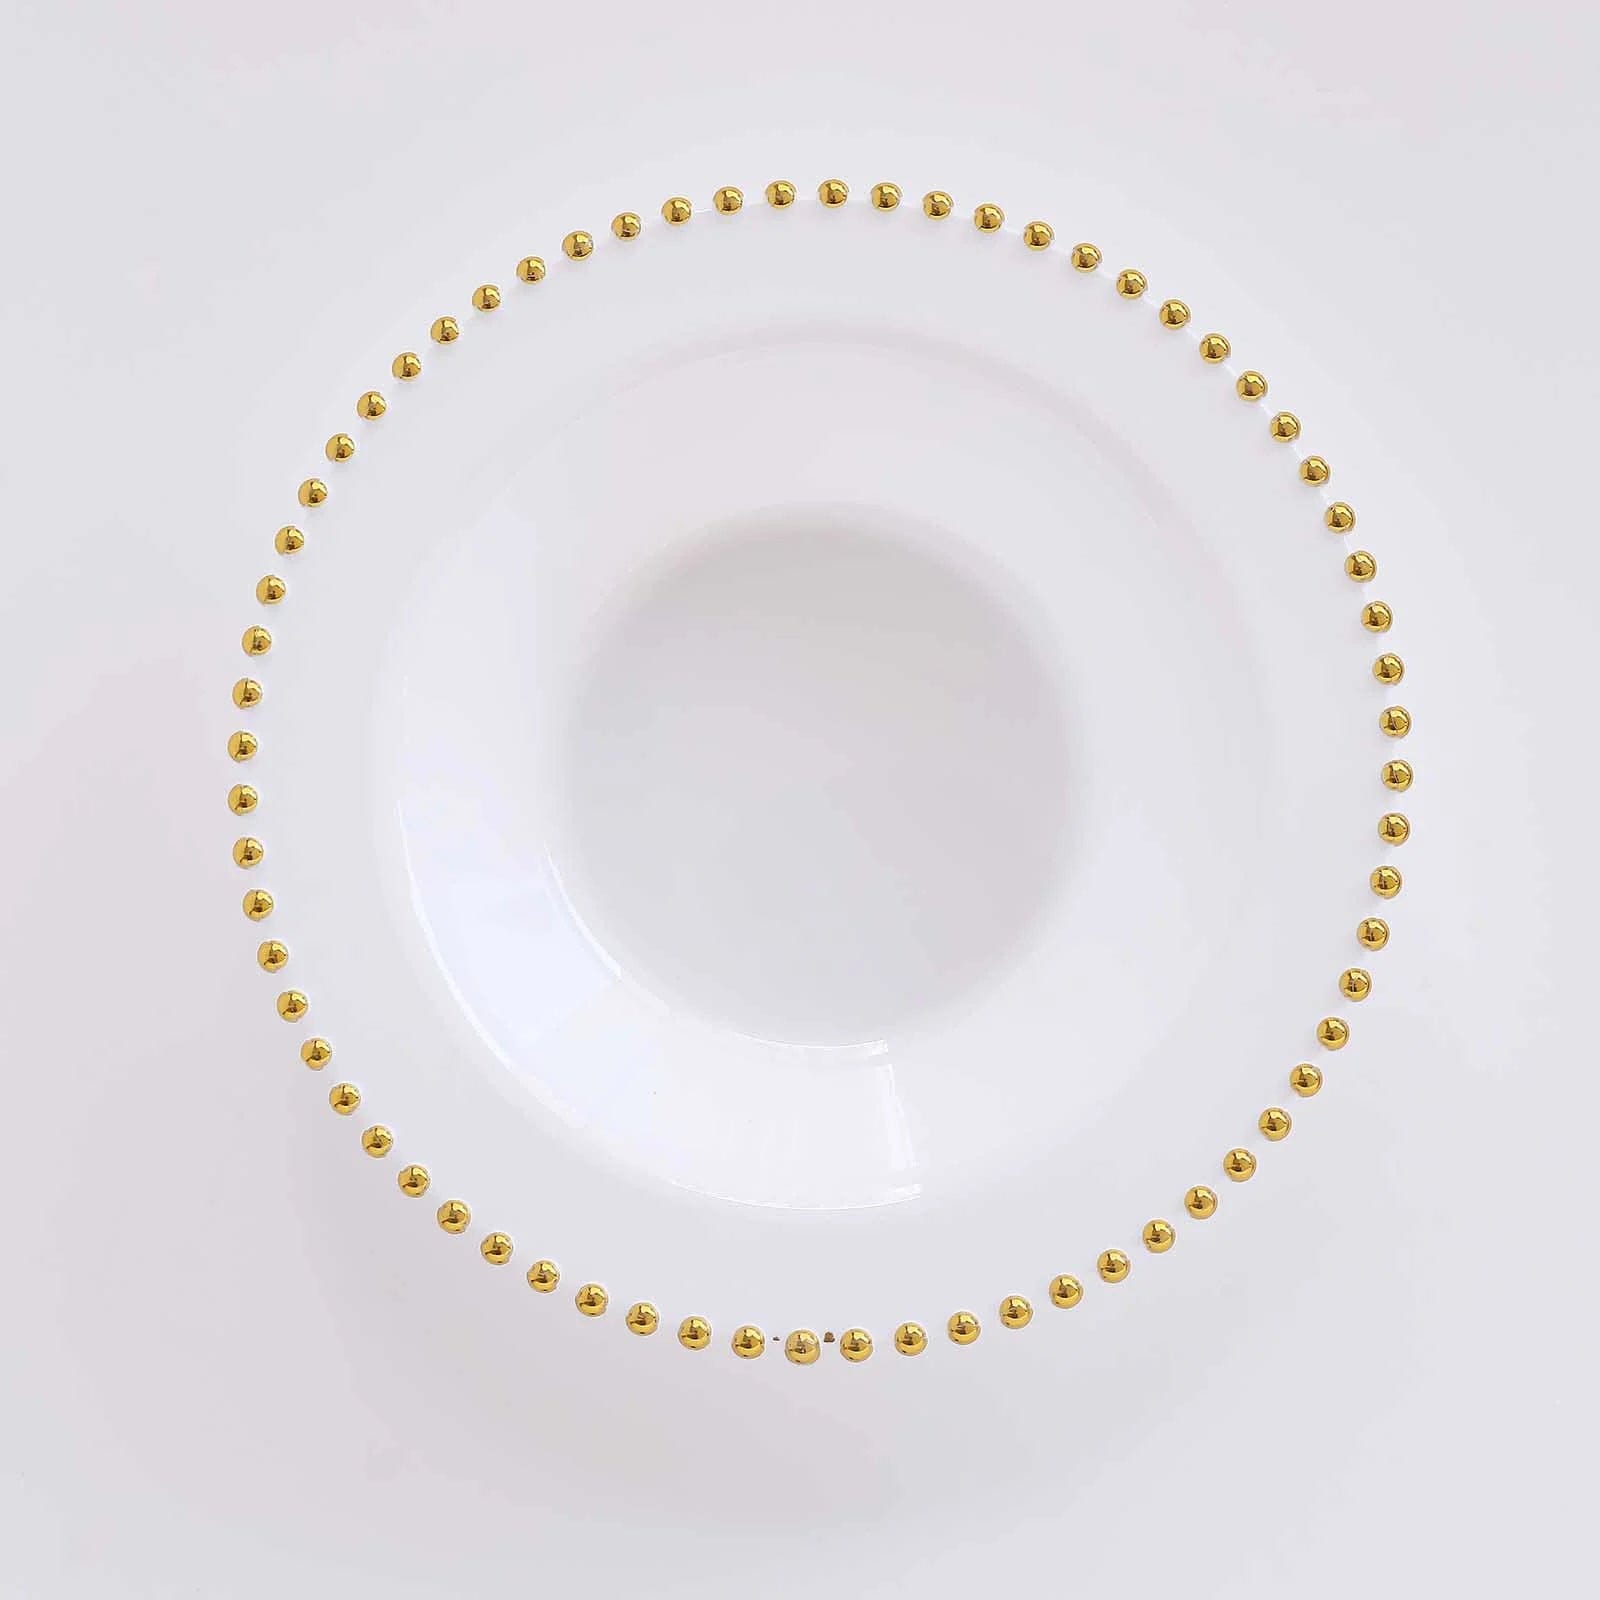 10 Plastic Soup Bowls with Beaded Rim DSP_BO4239_12_WHGD